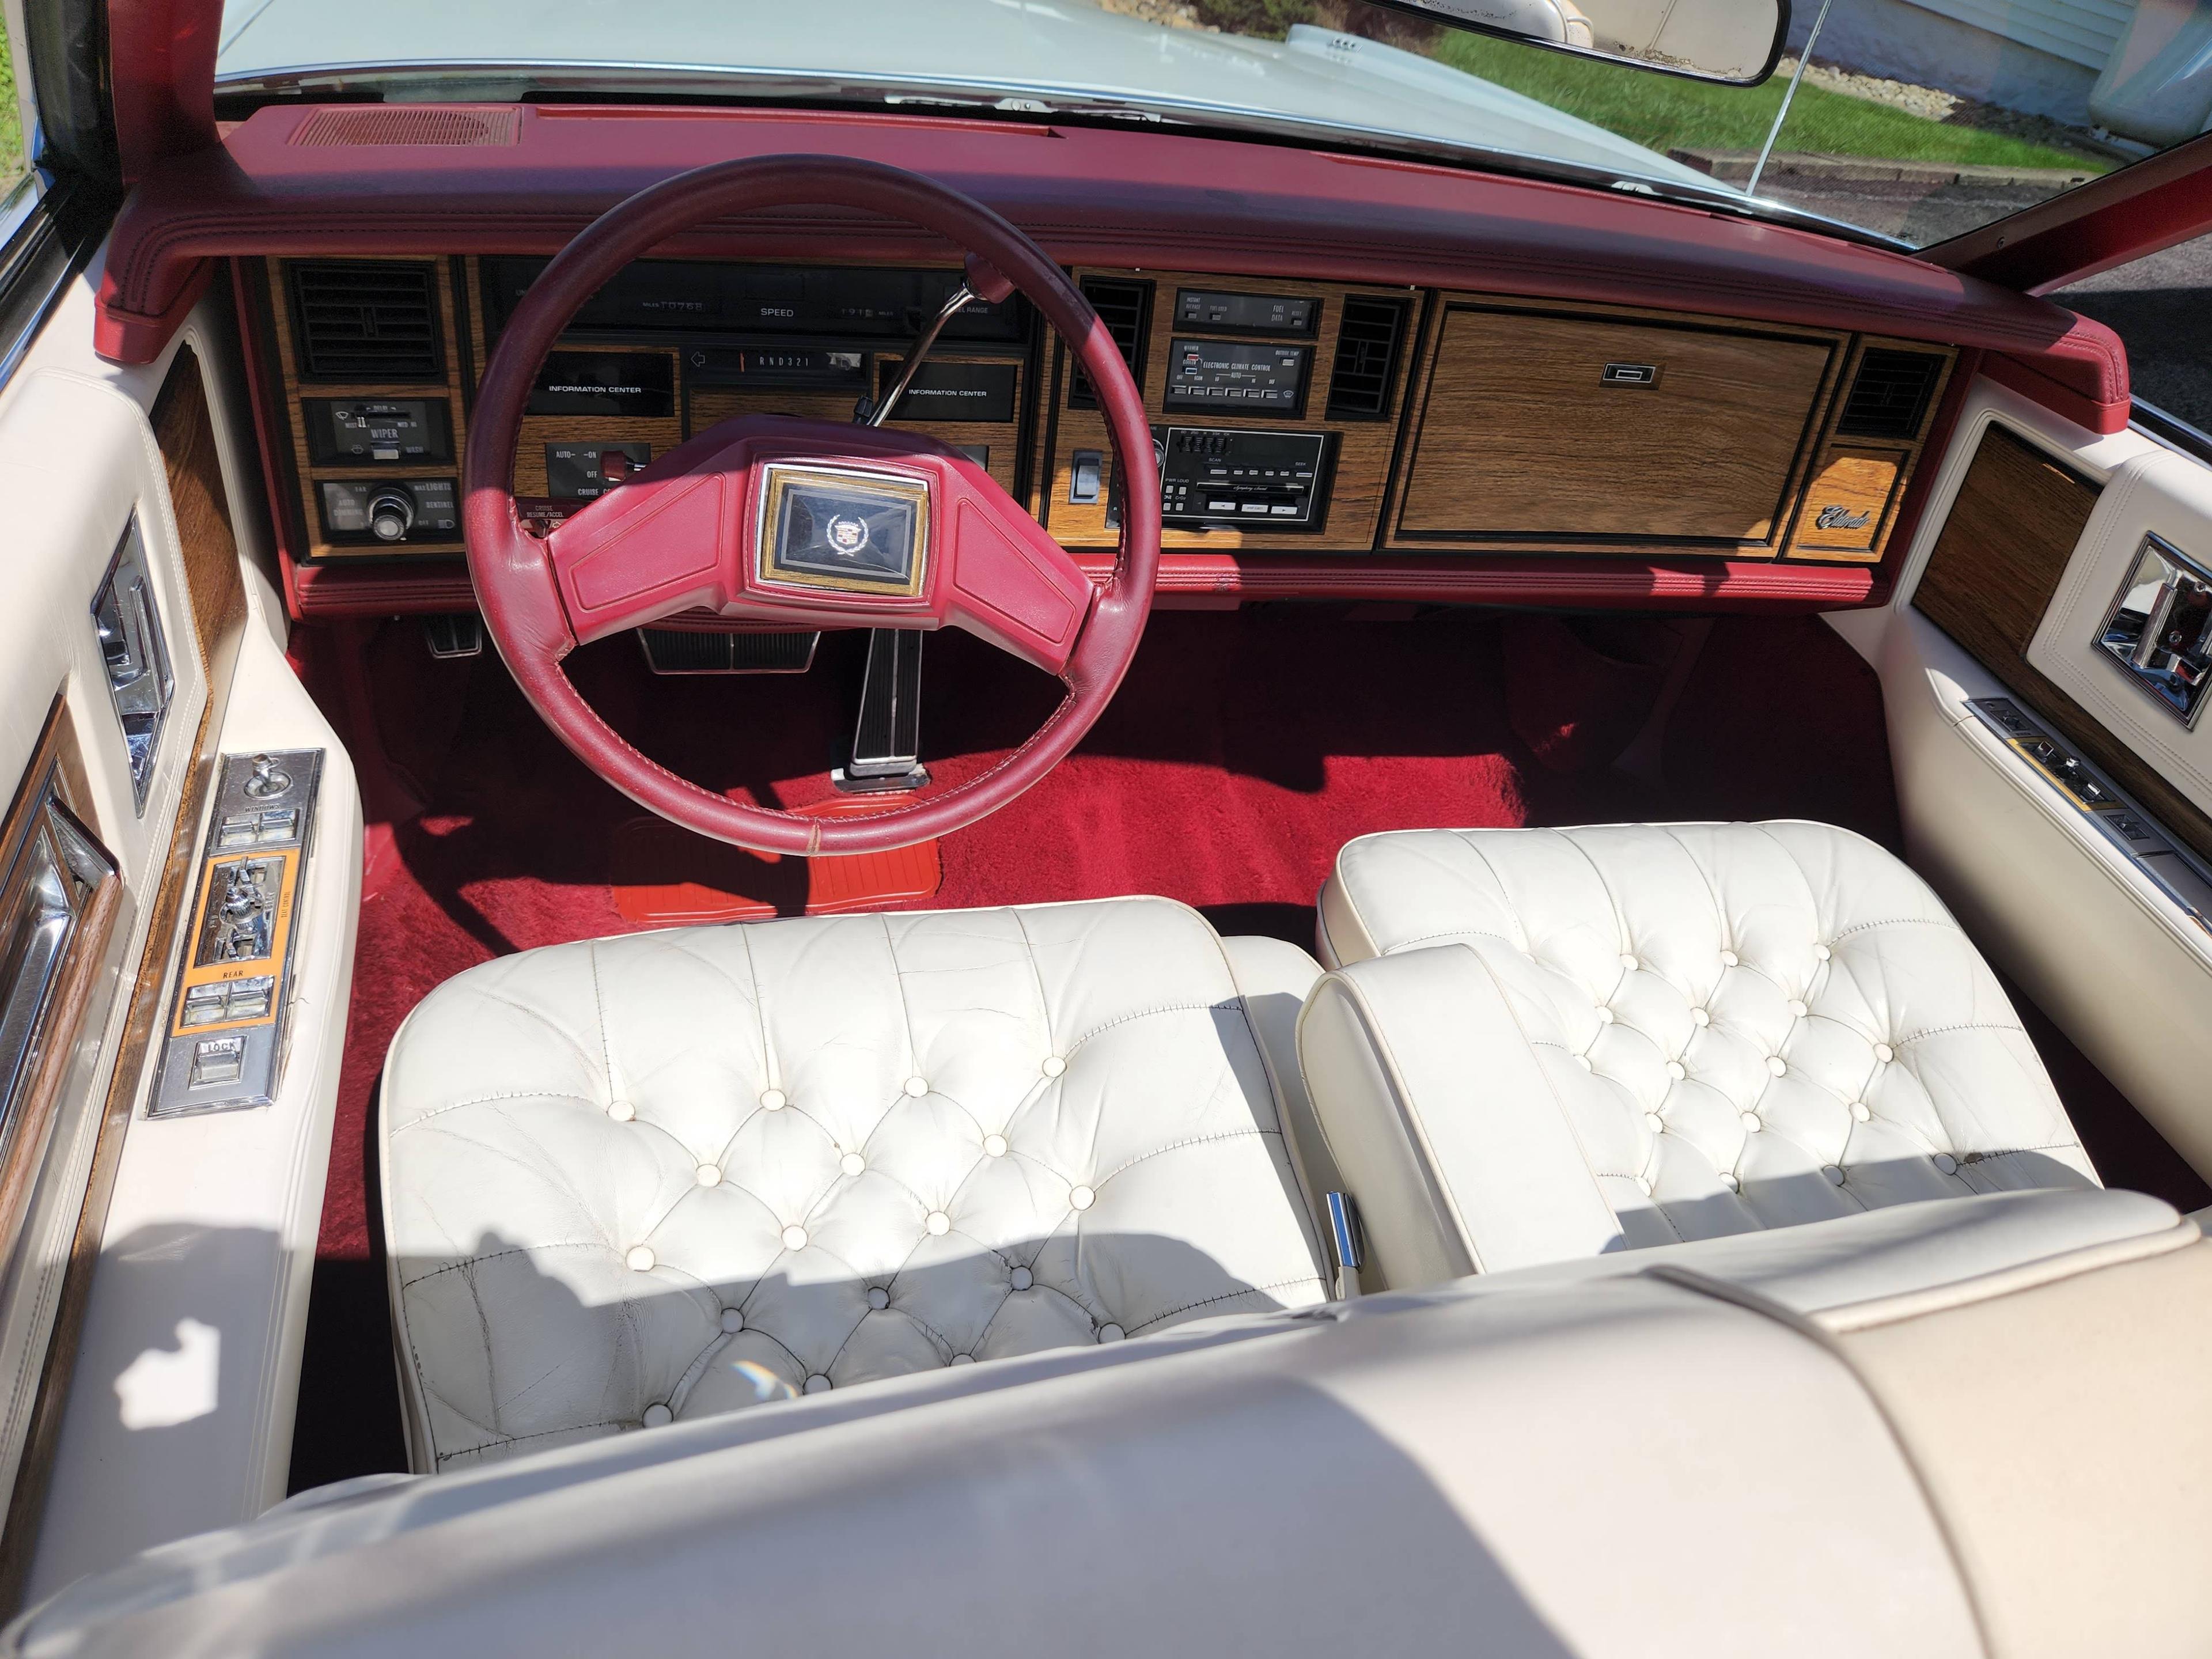 1984 Cadillac Eldorado Biarritz Convertible. 1 of only 3300 produced. We pu